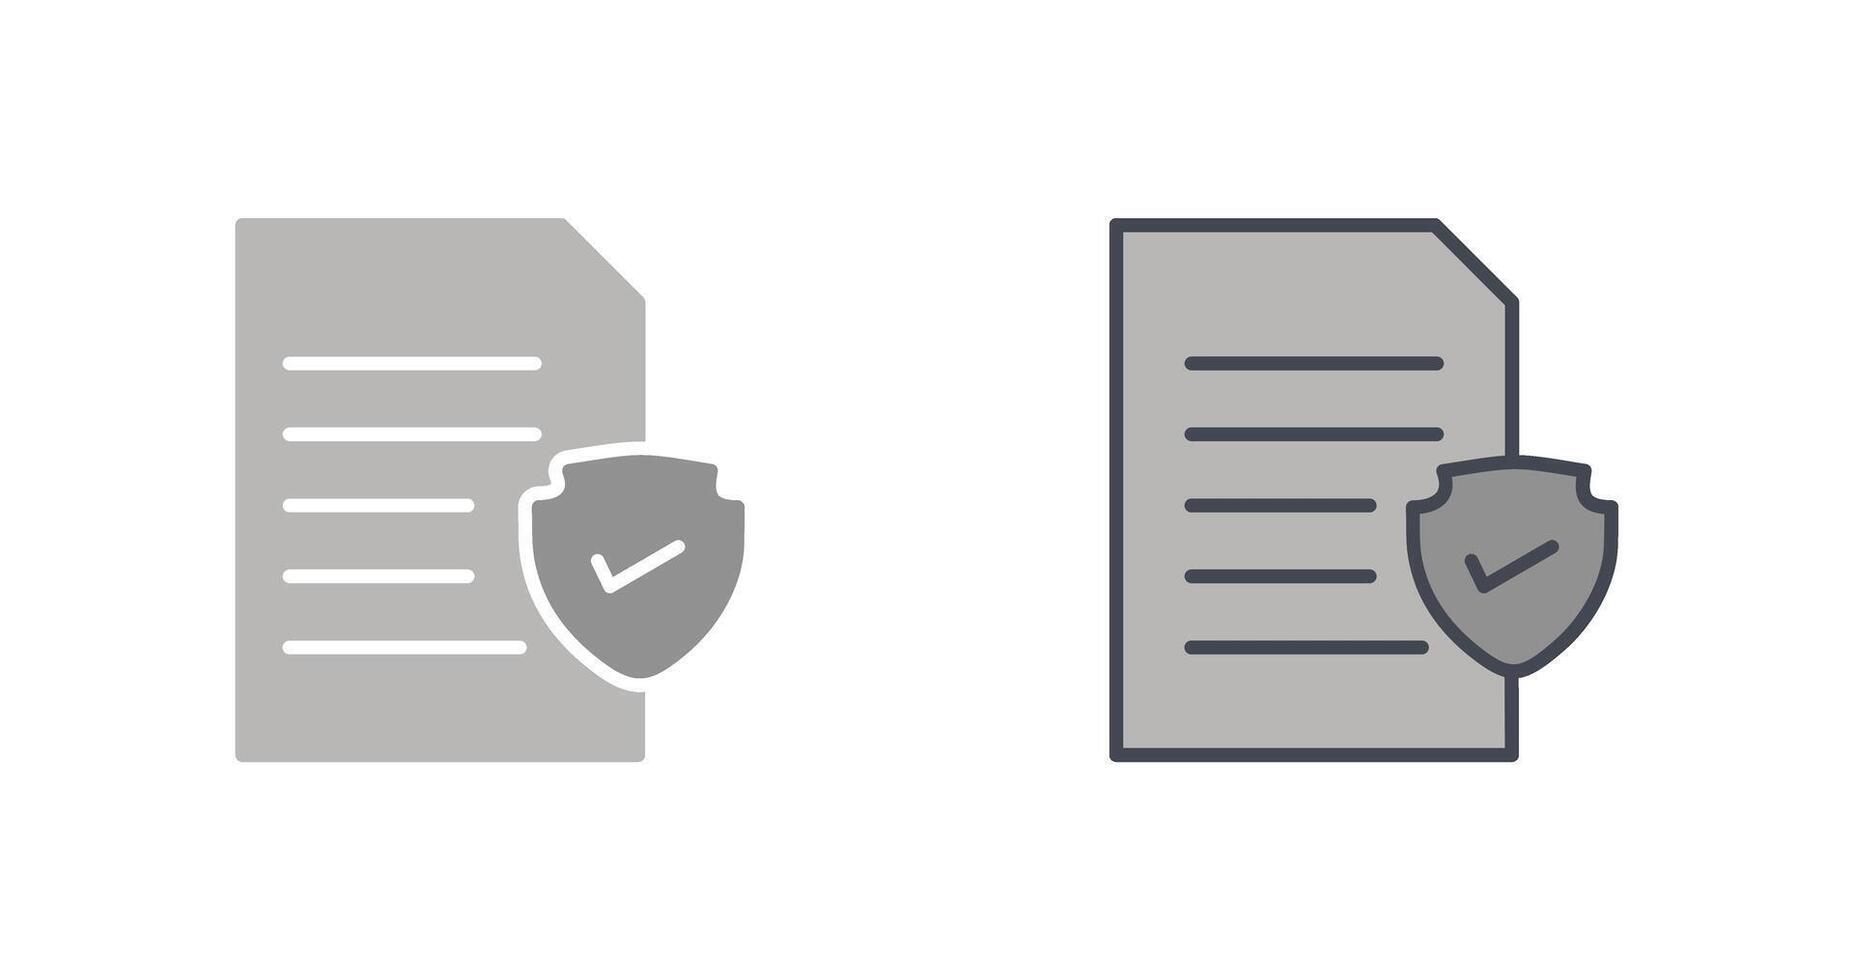 File Protection Icon Design vector